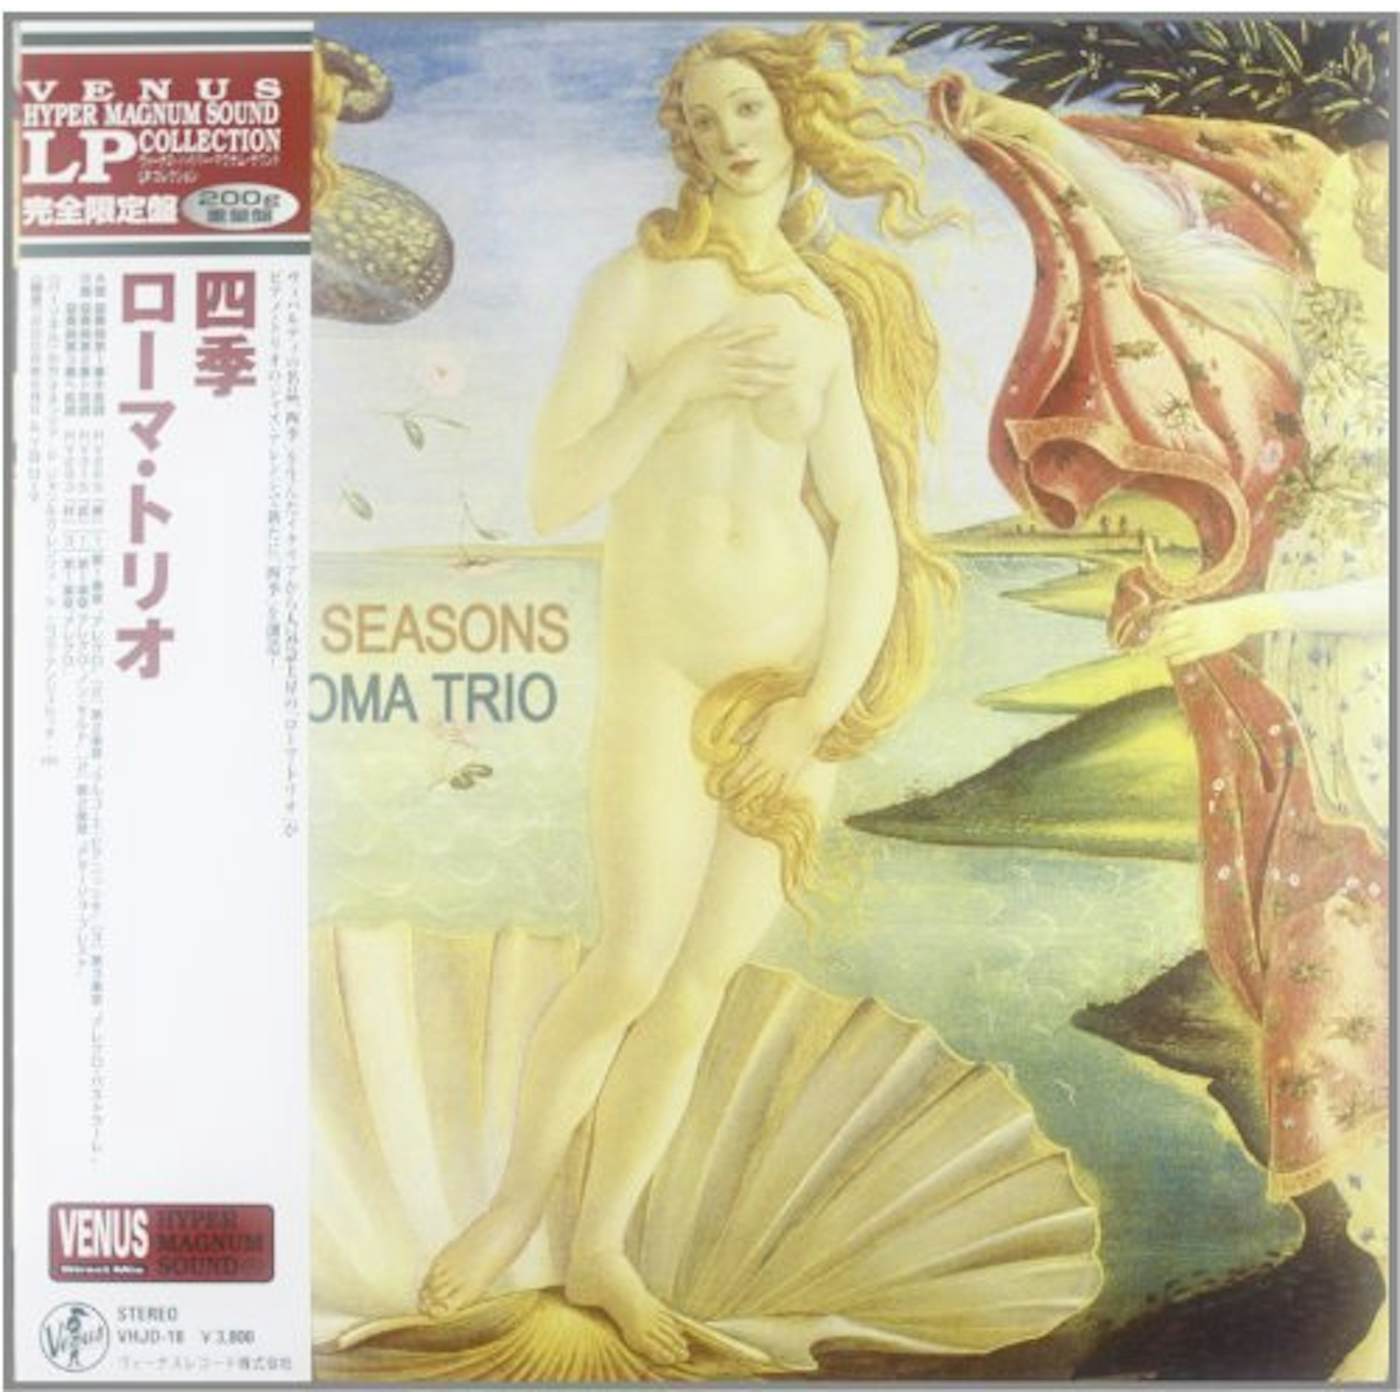 Roma Trio FOUR SEASONS 1 Vinyl Record